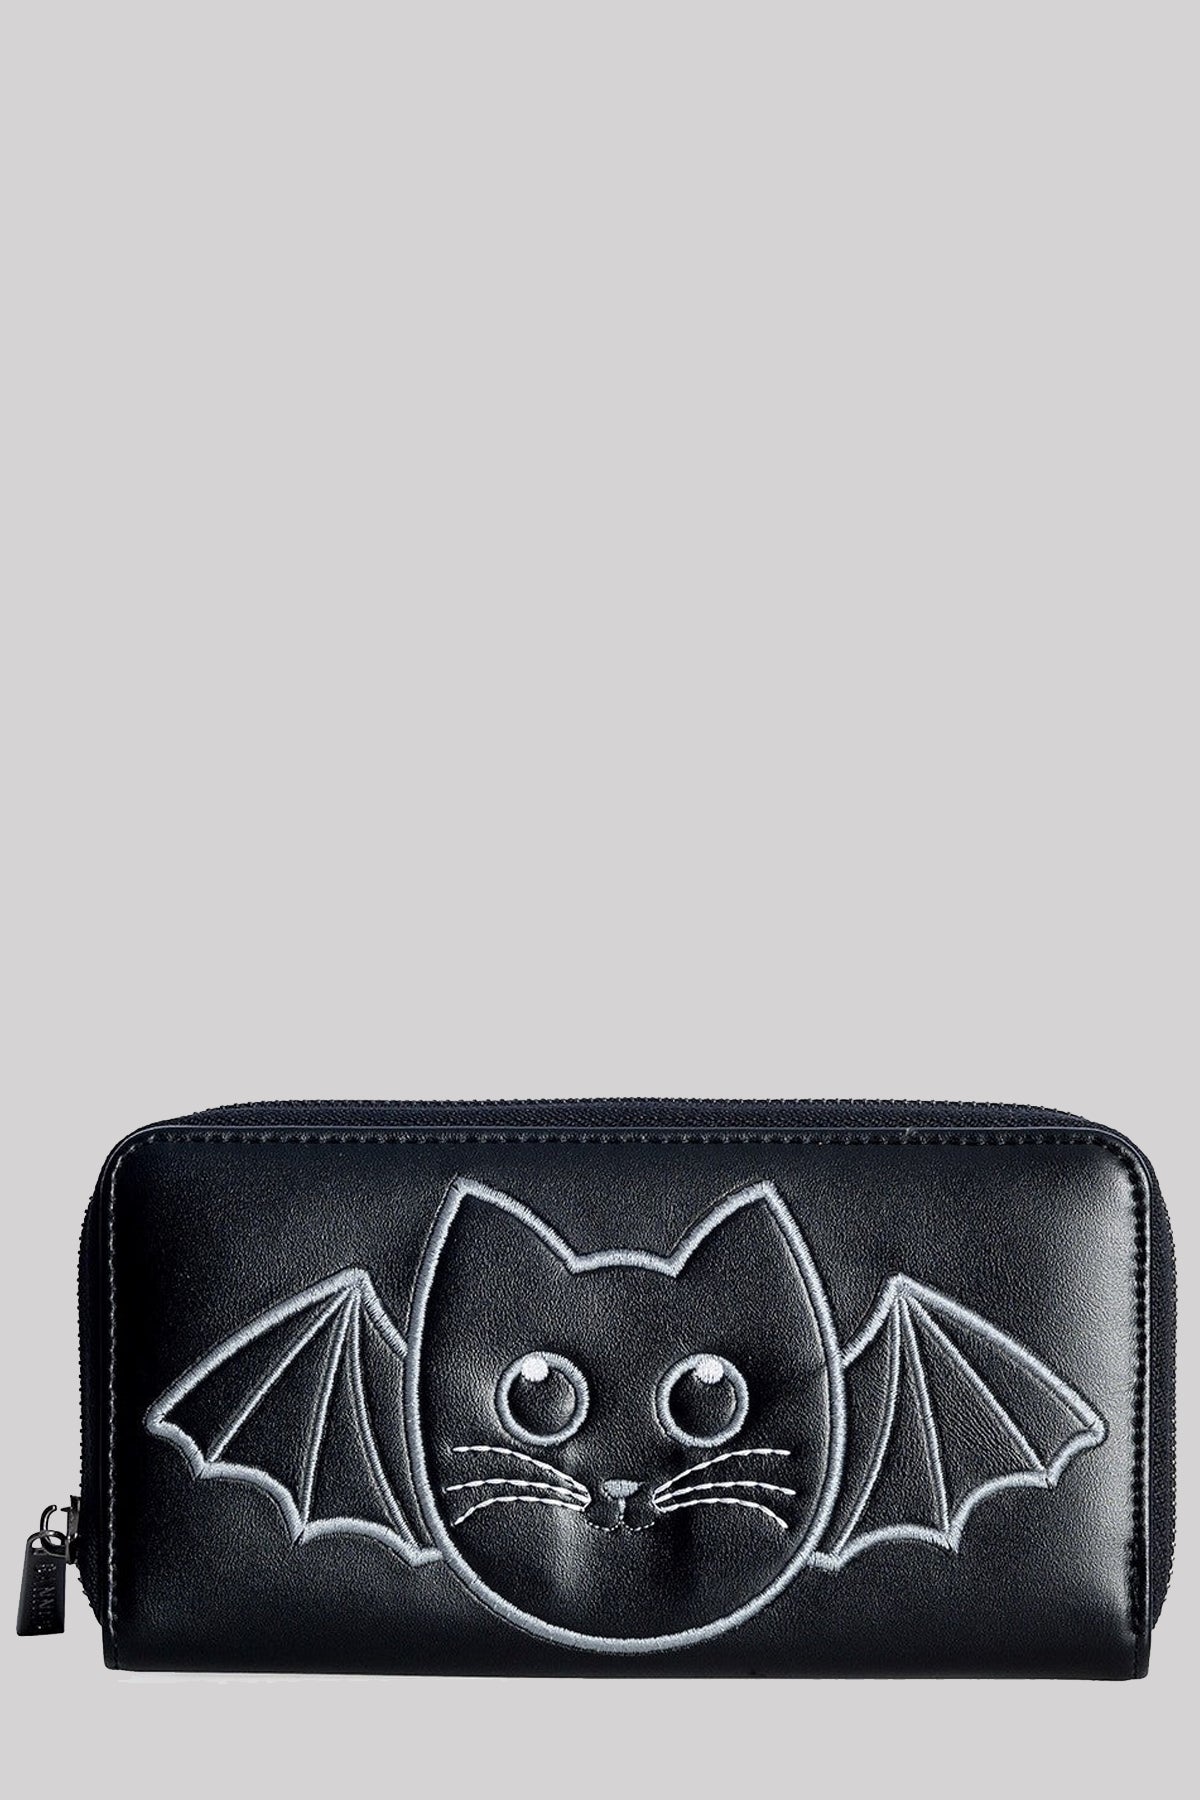 Banned Wendigo Bat Cute Gothic Embroidery Wallet